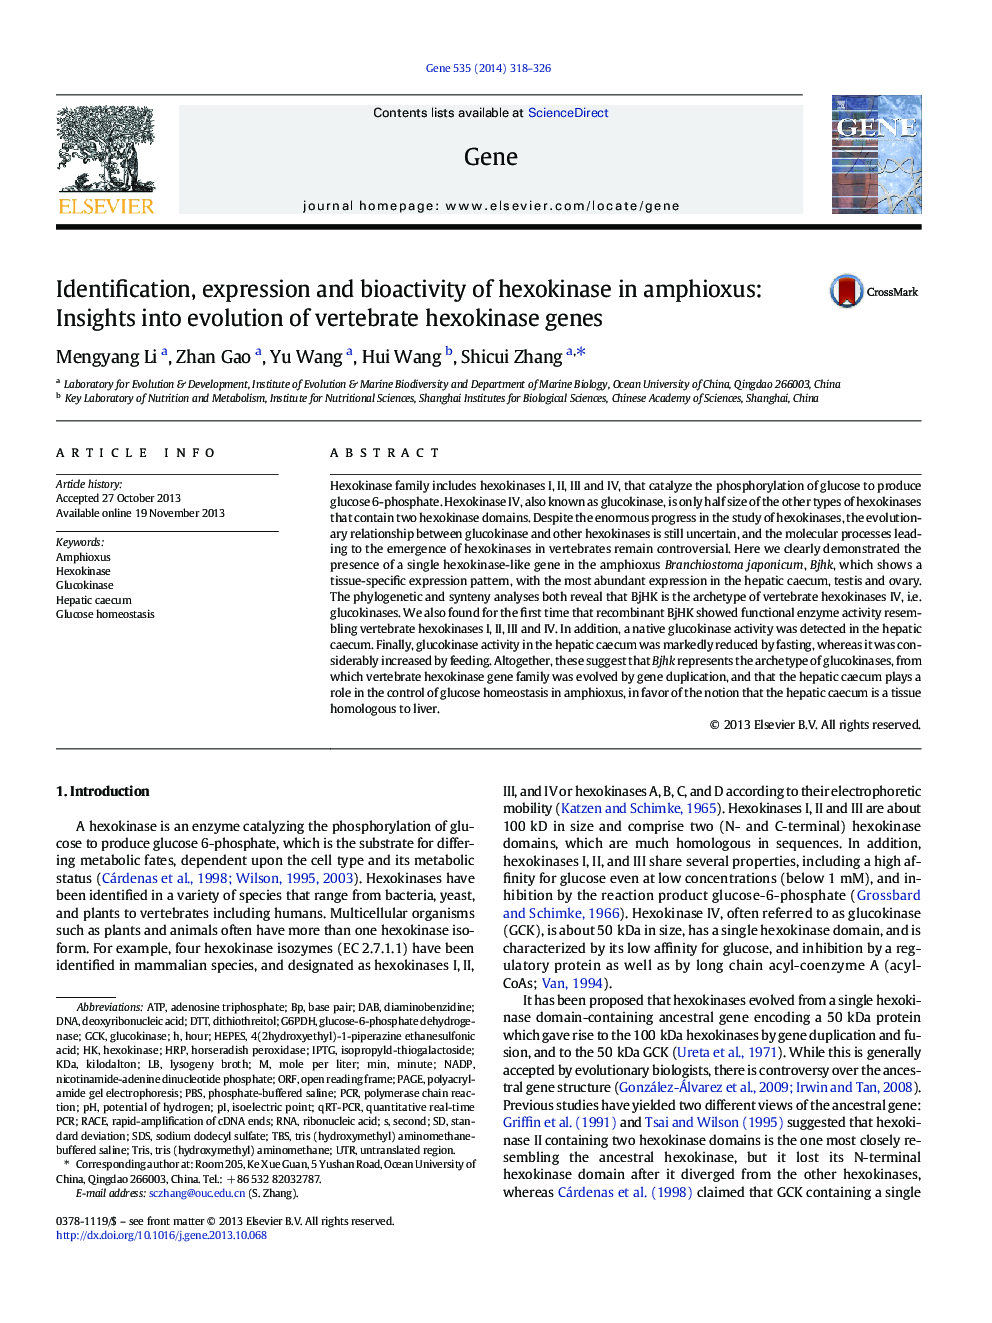 Identification, expression and bioactivity of hexokinase in amphioxus: Insights into evolution of vertebrate hexokinase genes